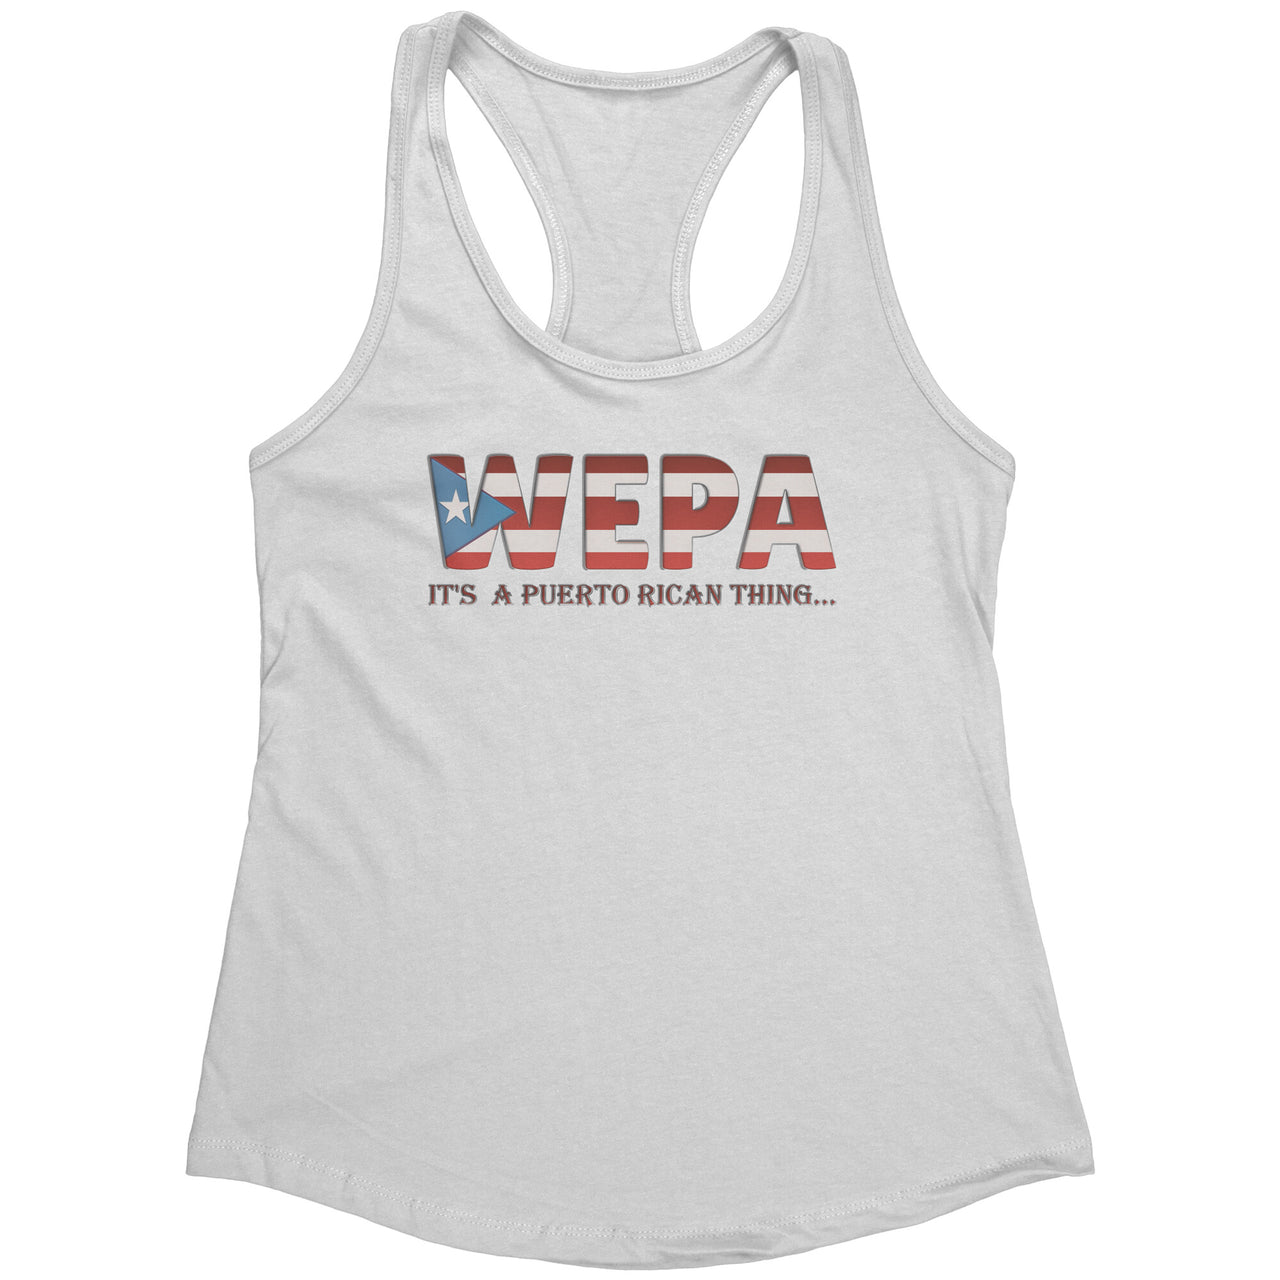 WEPA - PR Thing Woman's Tank